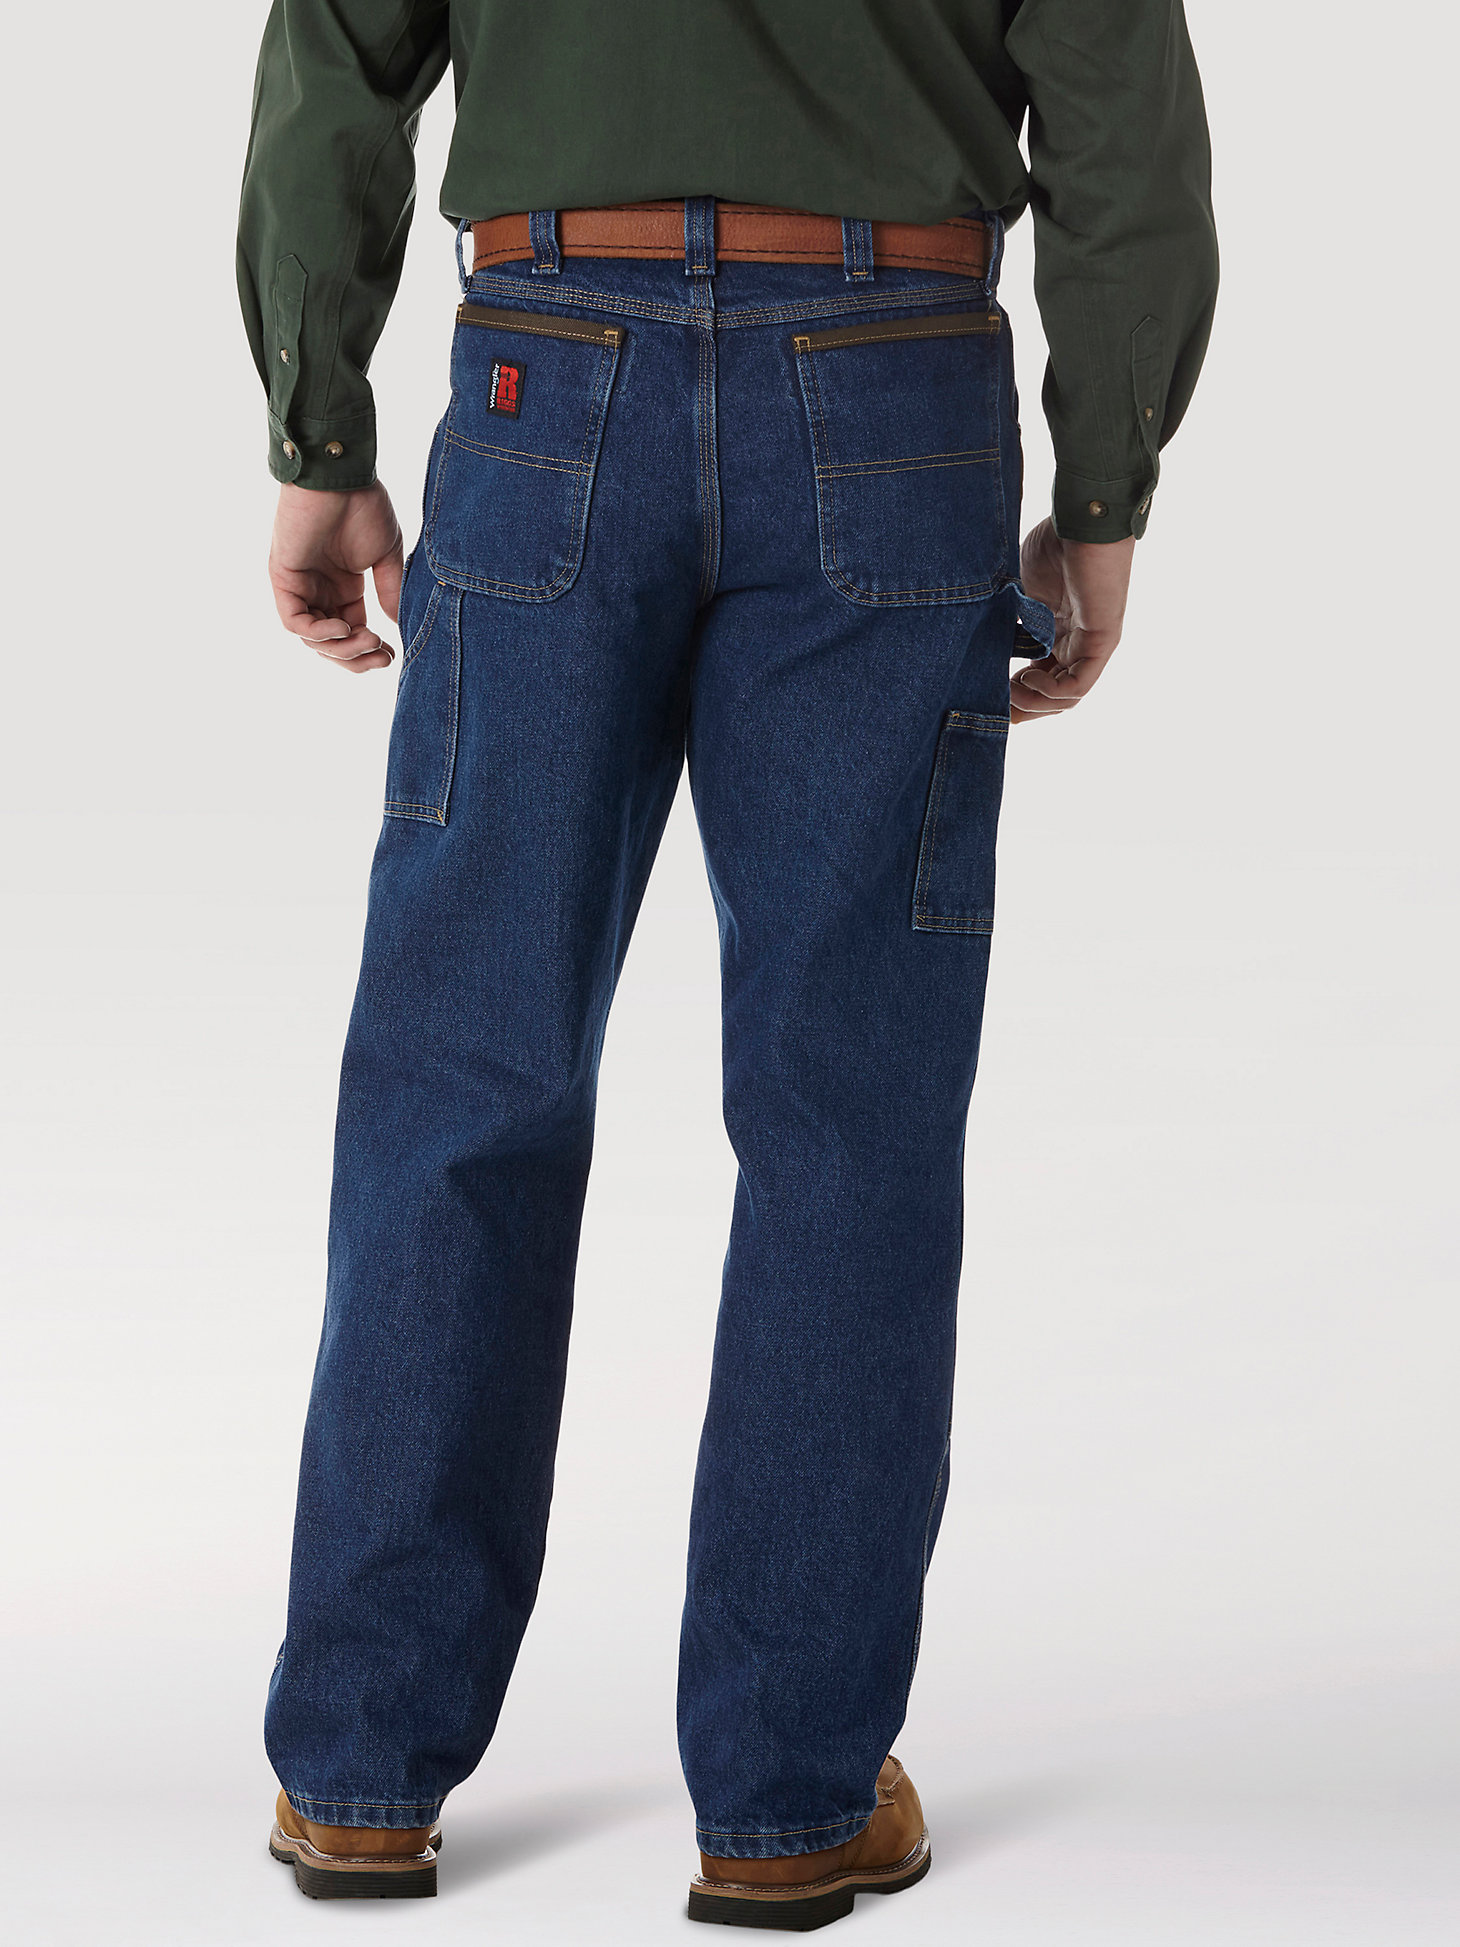 Wrangler® RIGGS Workwear® Utility Jean in Antique Indigo alternative view 2